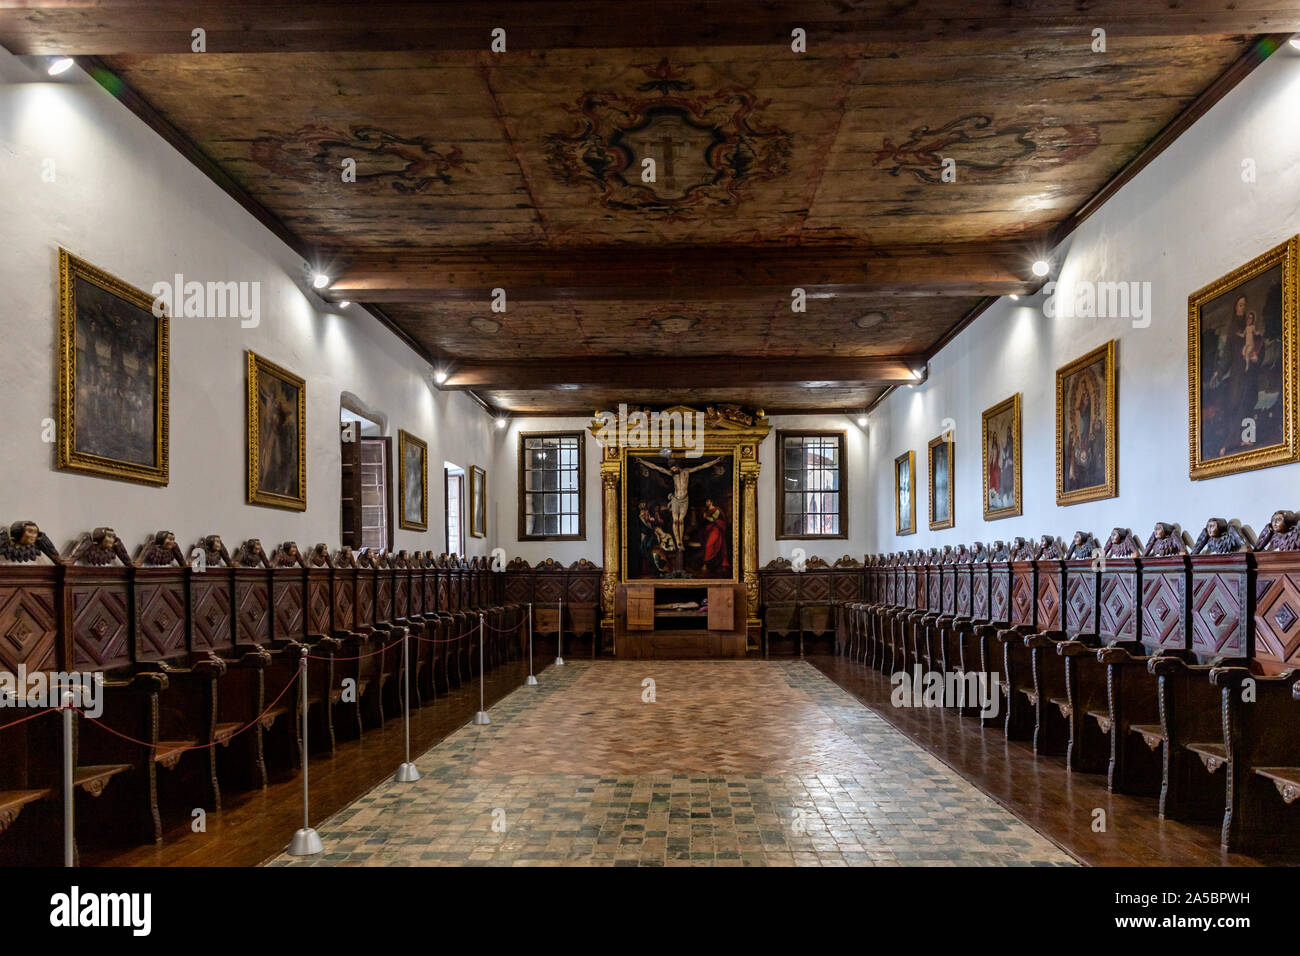 Grande chambre avec un plafond peint et d'une rangée de stalles en bois. Convento de Santa Clara (Couvent Santa Clara), Funchal, Madeira, Portugal Banque D'Images